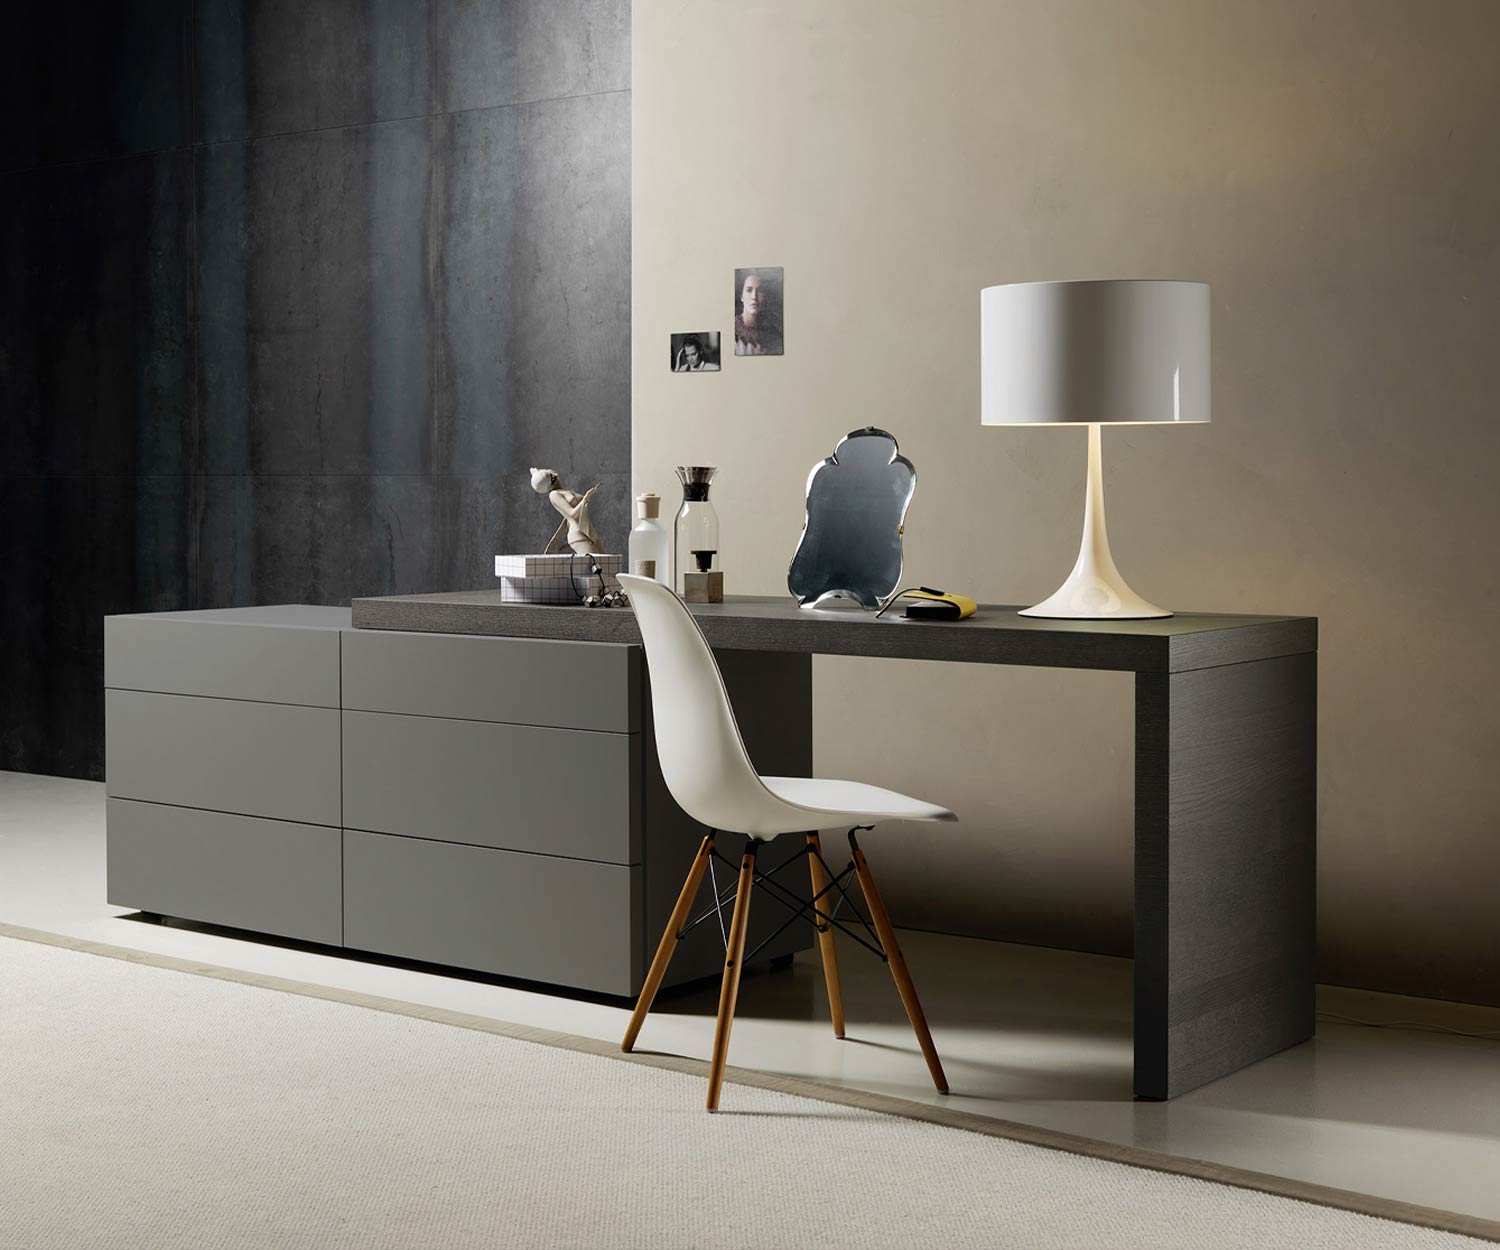 Exclusive Livitalia Valeo design chest of drawers with desk